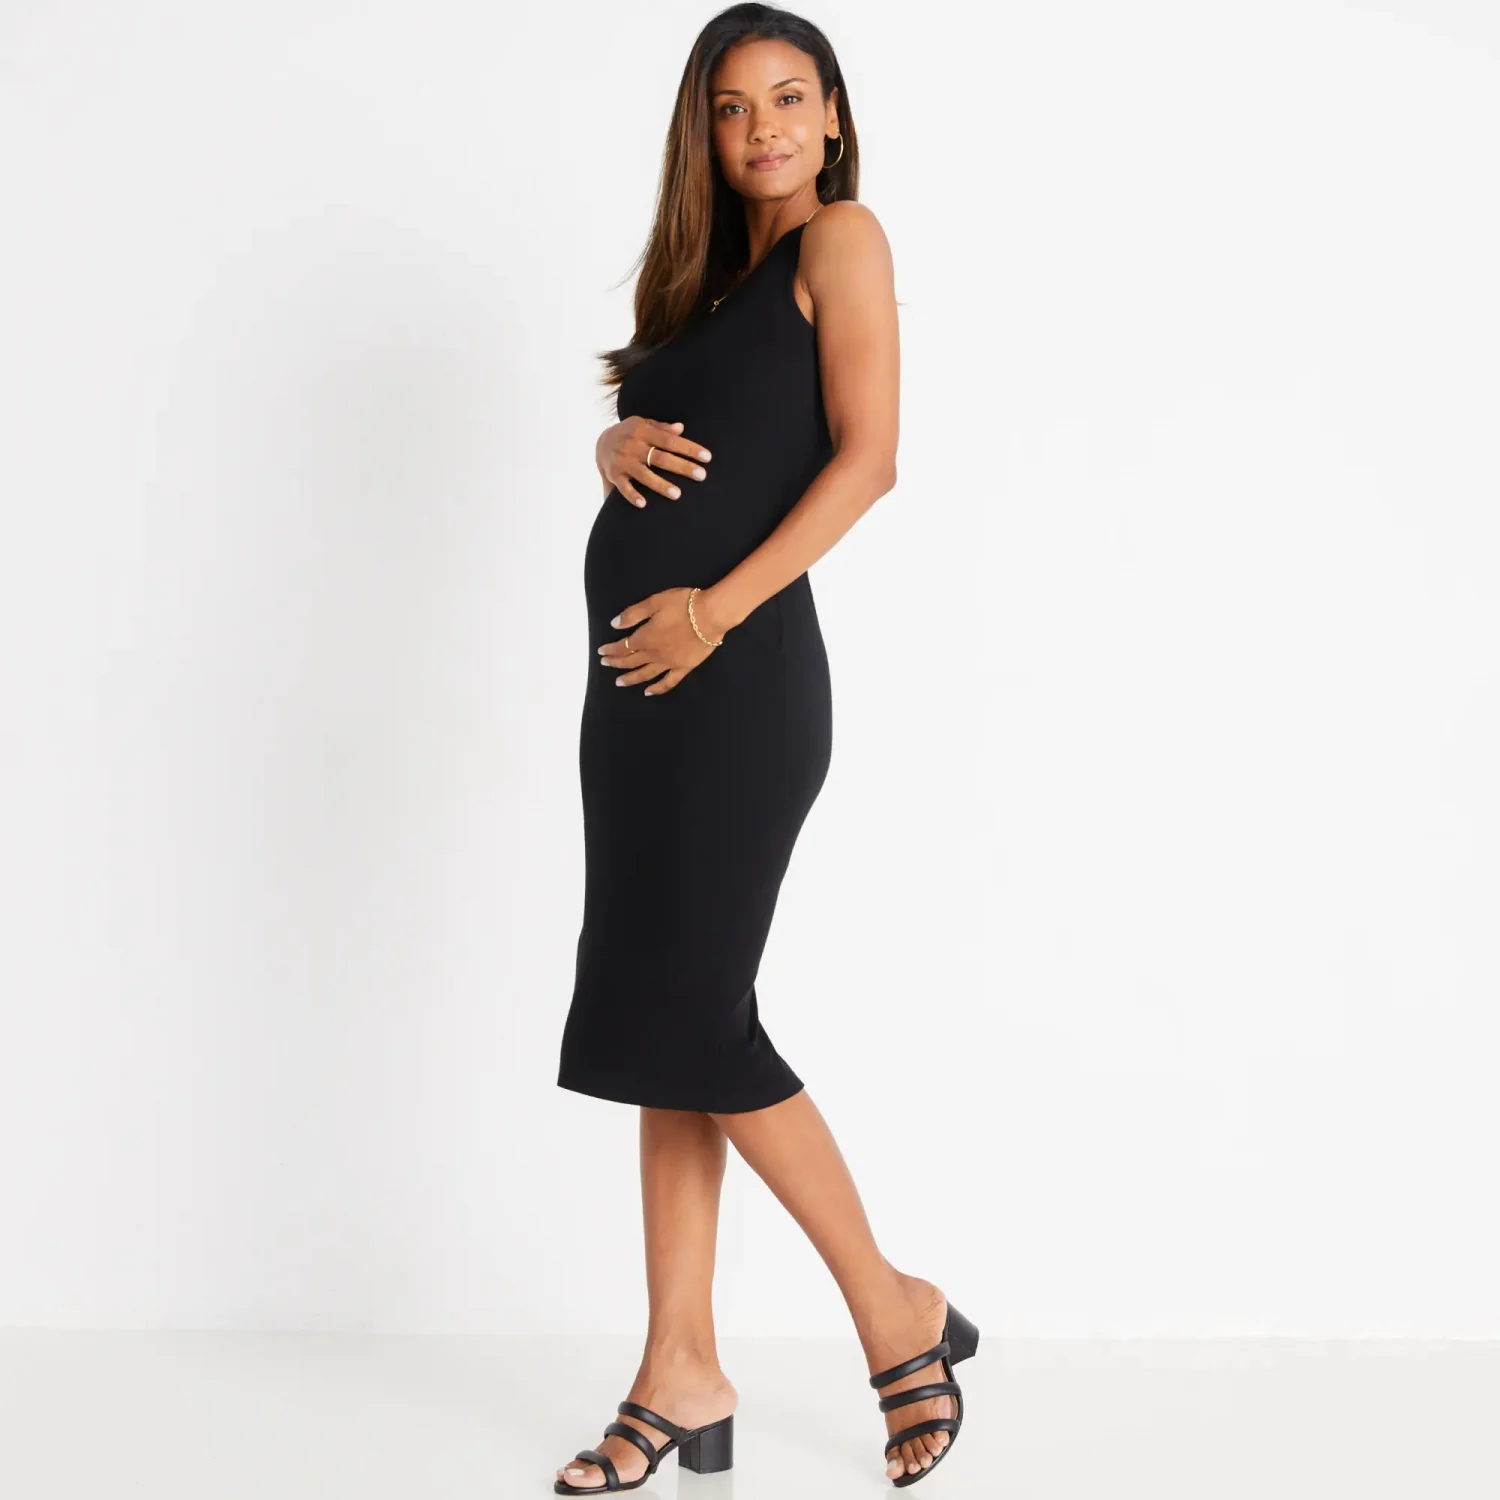 Marine Layer brand contemporary and stylish maternity friendly black ribbed midi dress